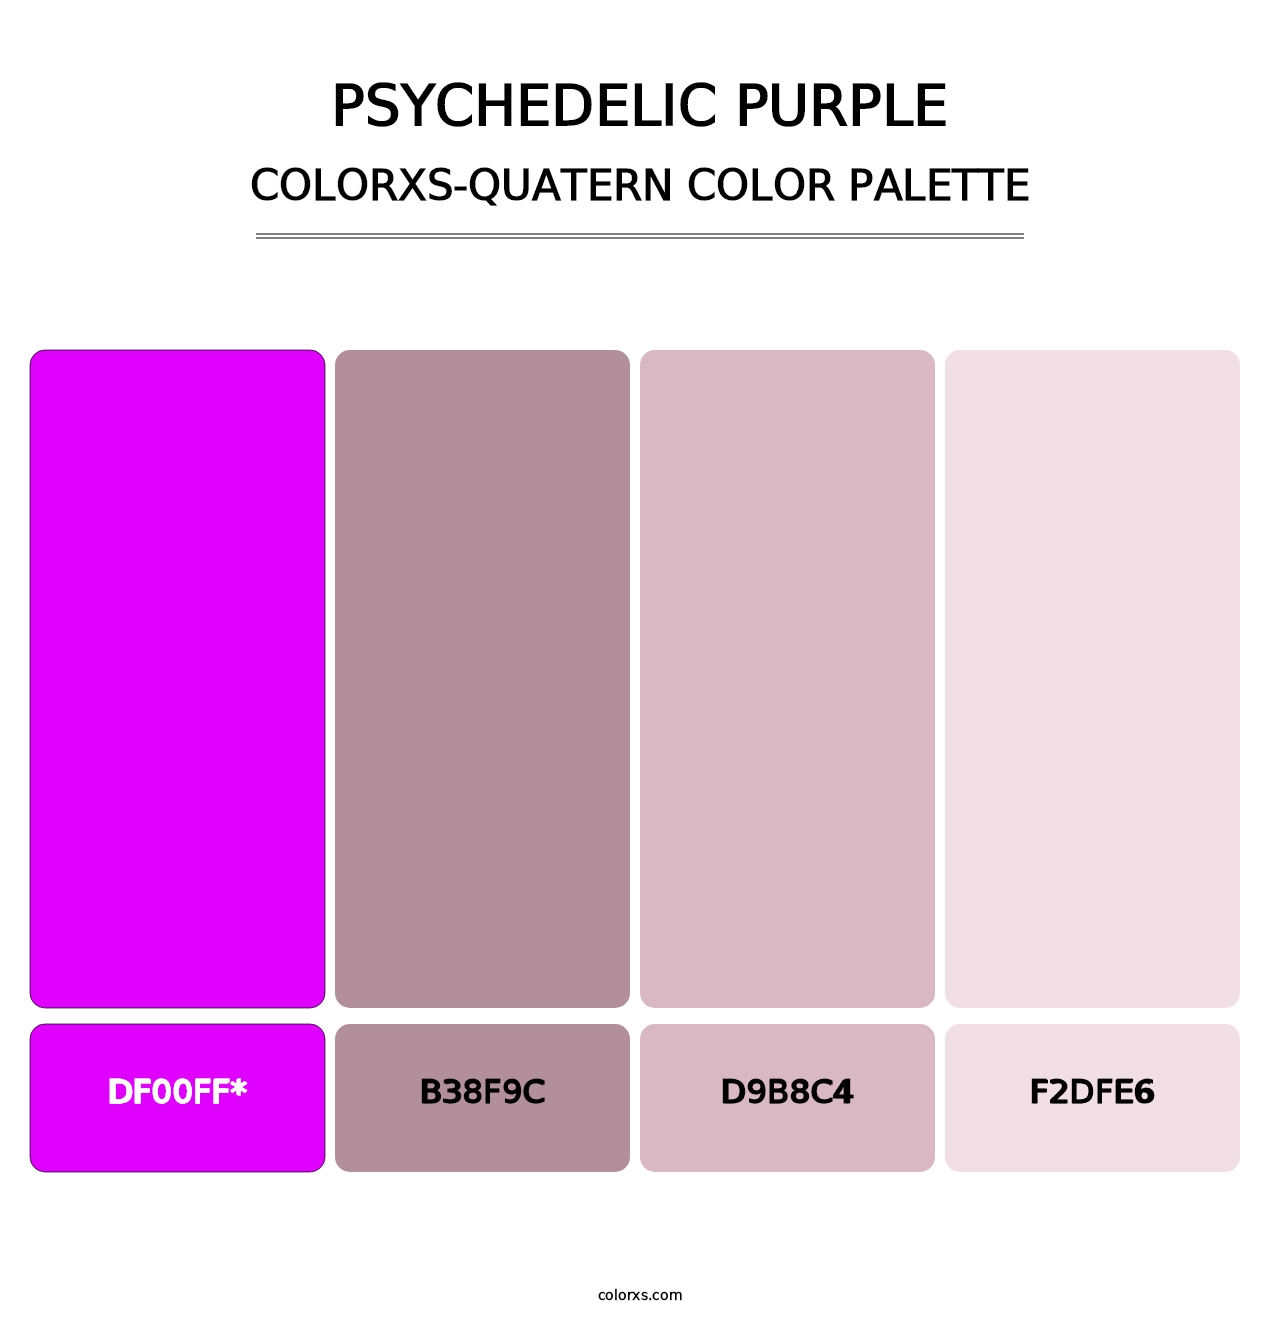 Psychedelic Purple - Colorxs Quatern Palette